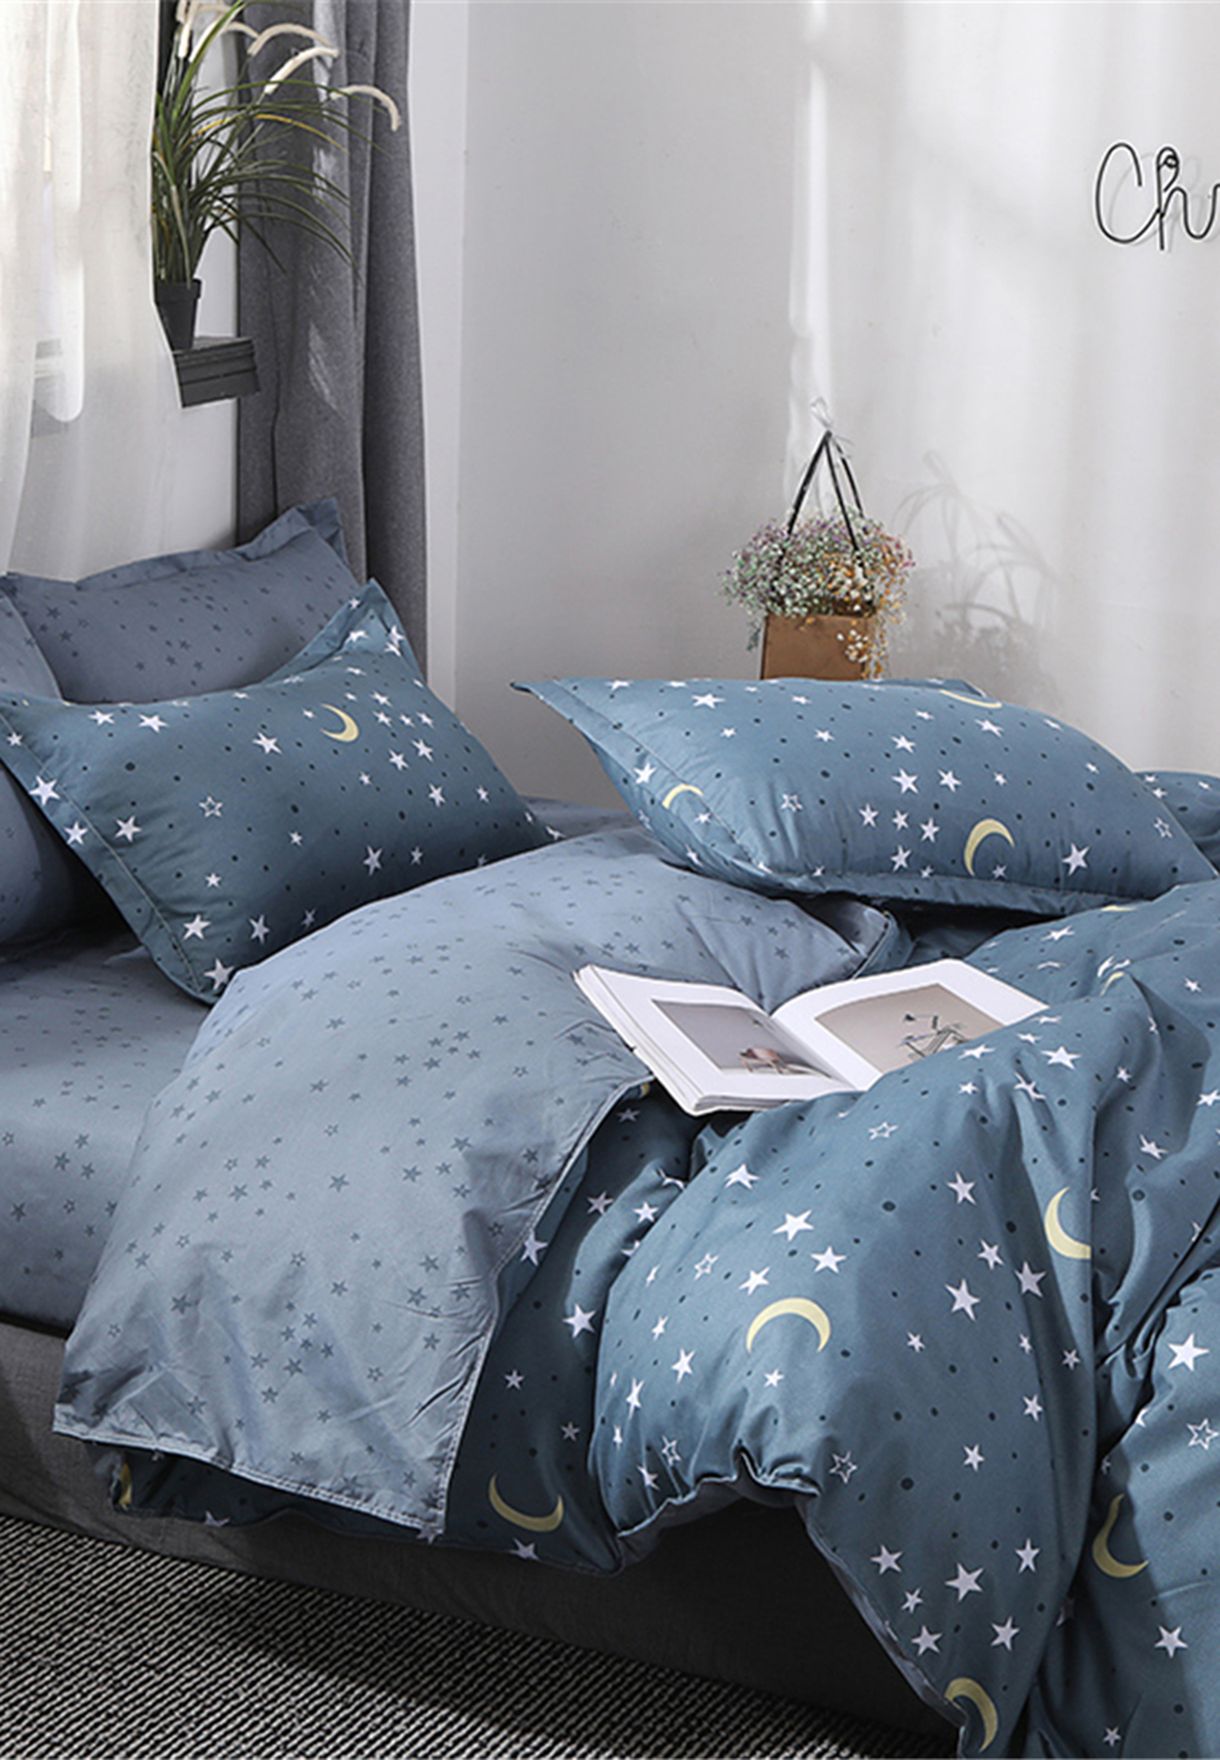 Stars & Moon Print Bedding Set - Double 200x200cm